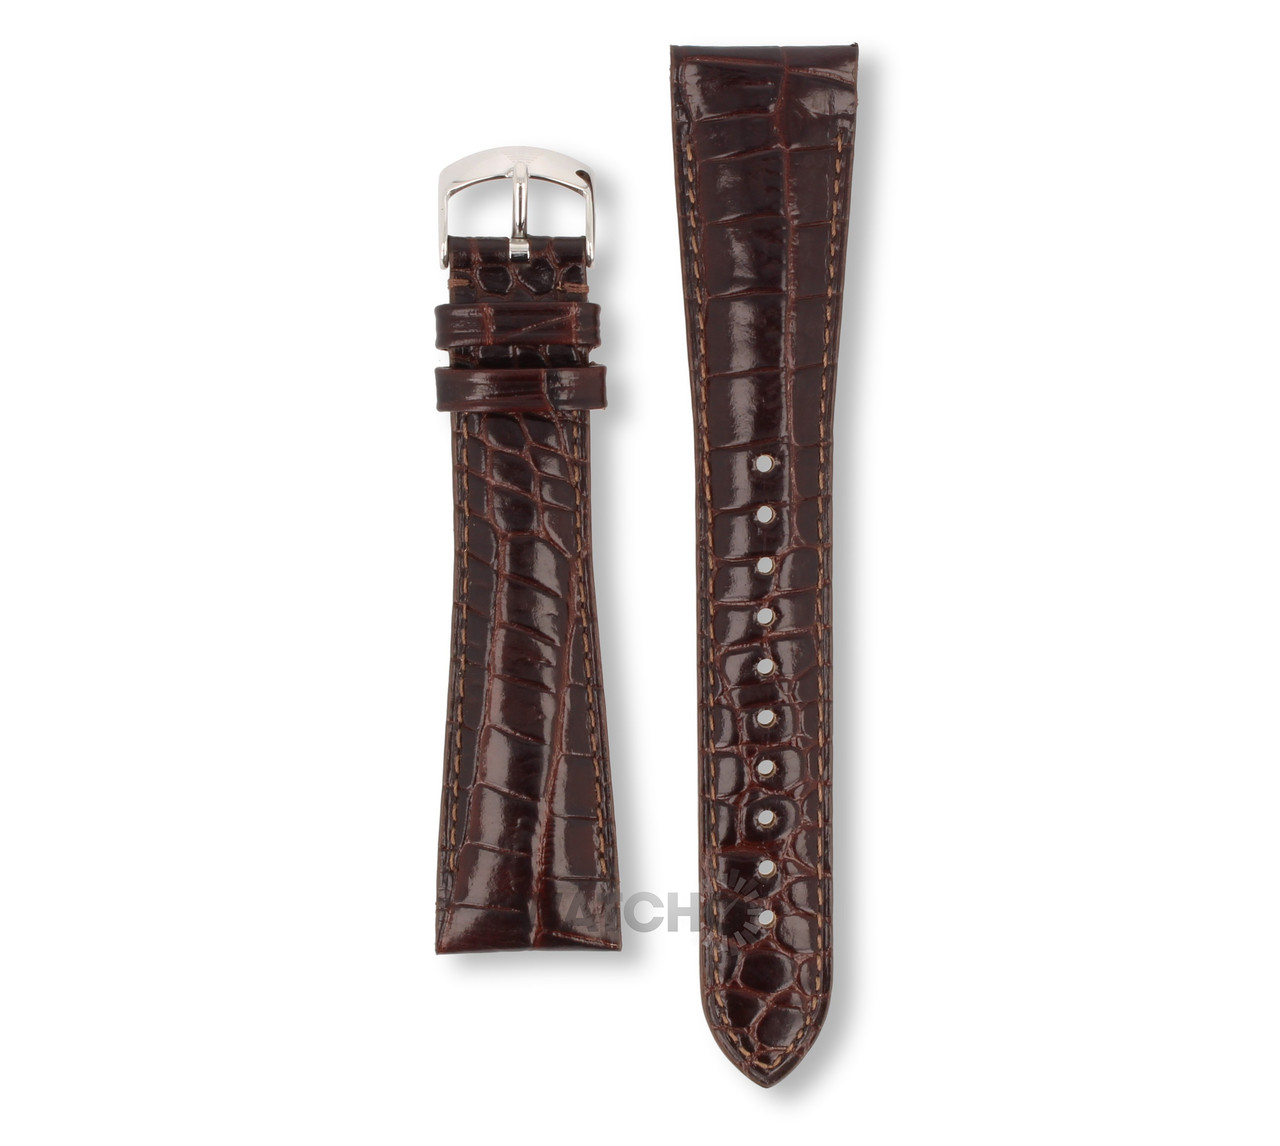 armani watch strap brown leather